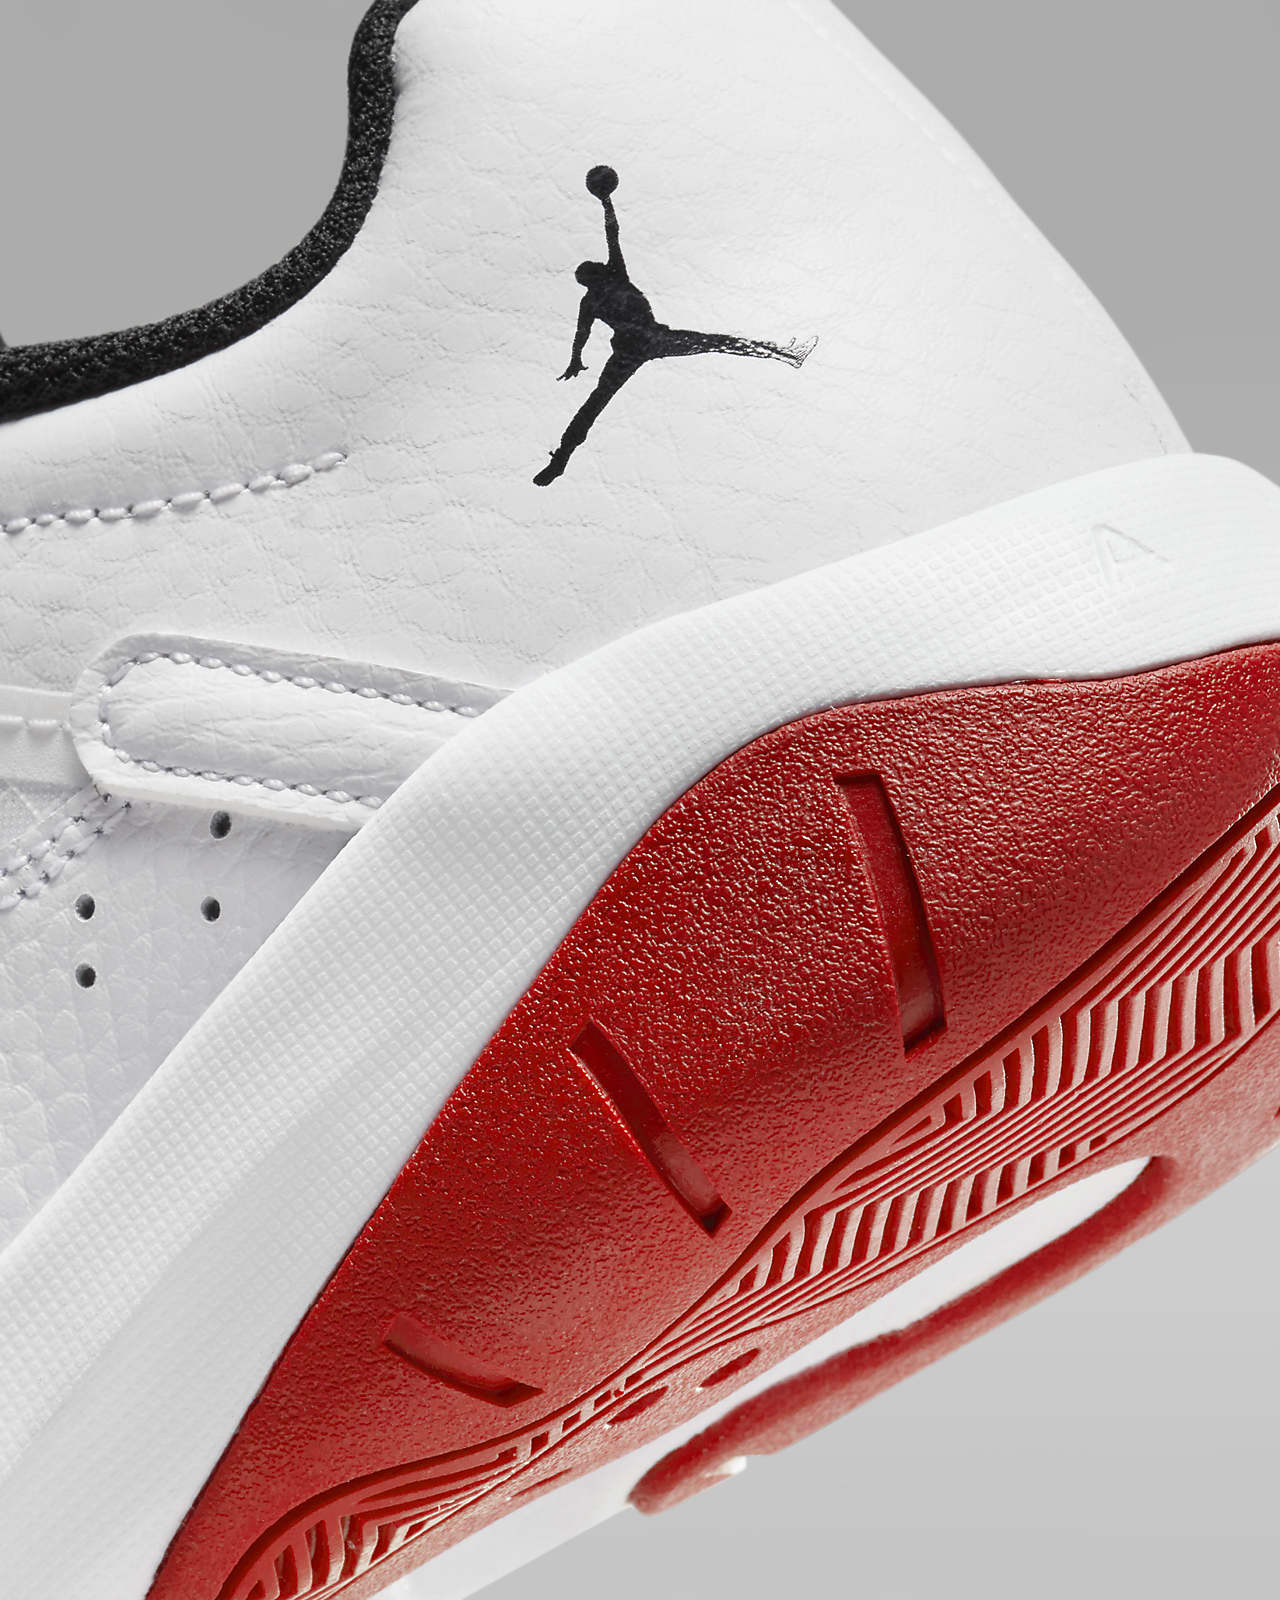 Air Jordan 11 Comfort Low Black / White - Gym Red